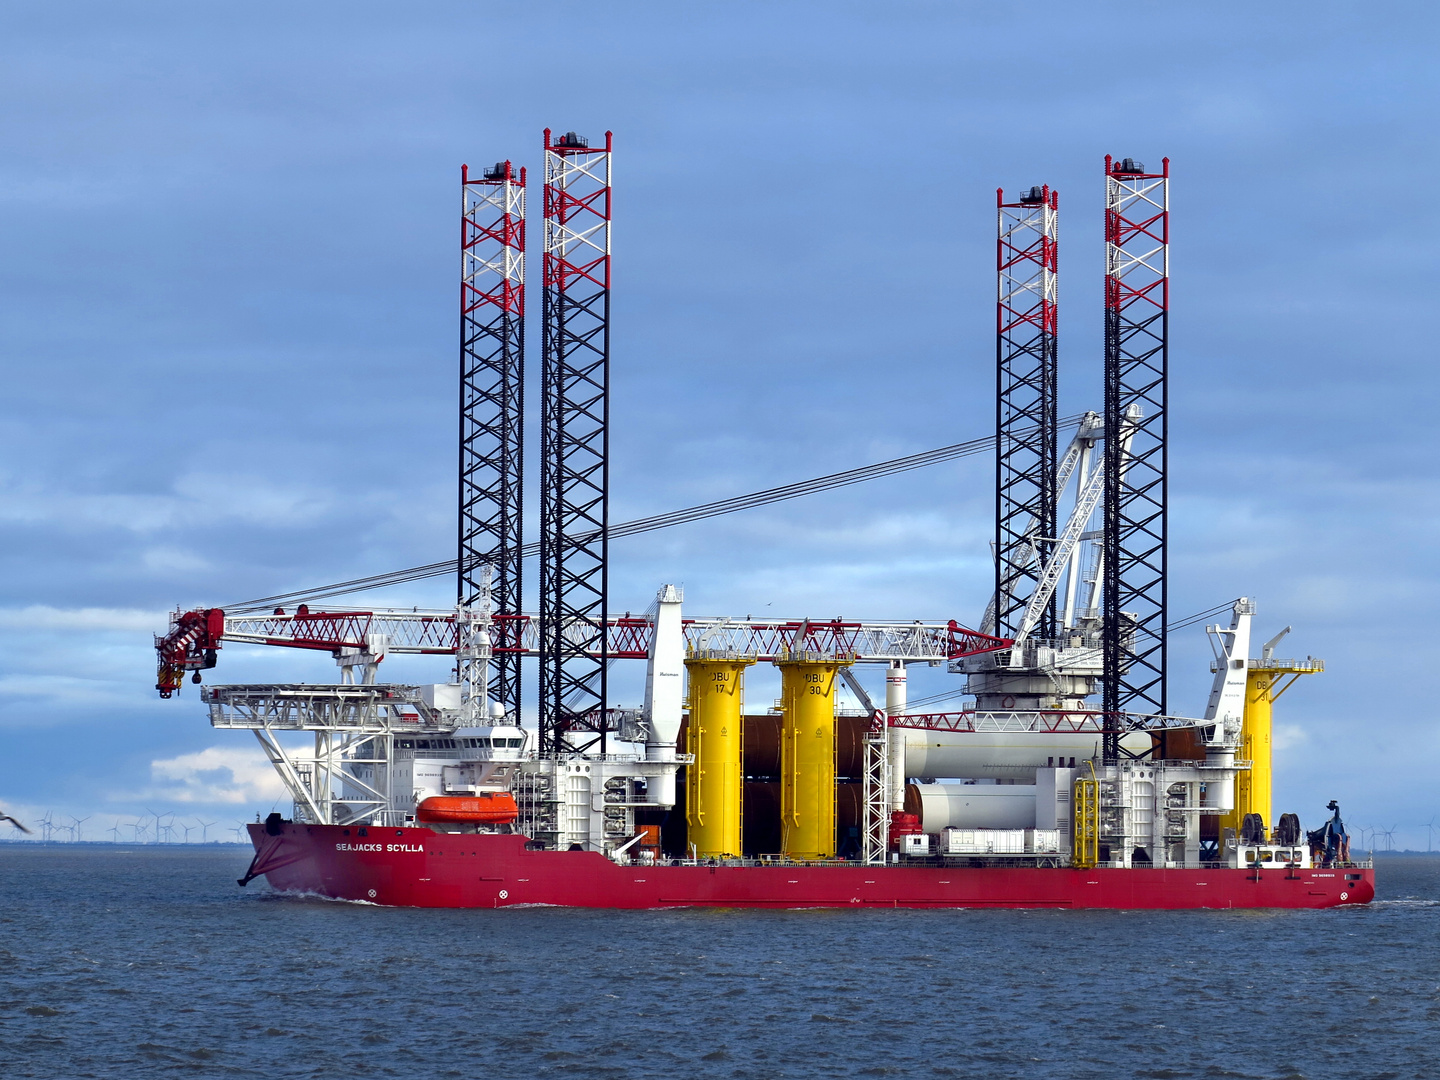 Seajacks Scylla, Offshore-Windpark-Installationsschiff vor Cuxhaven